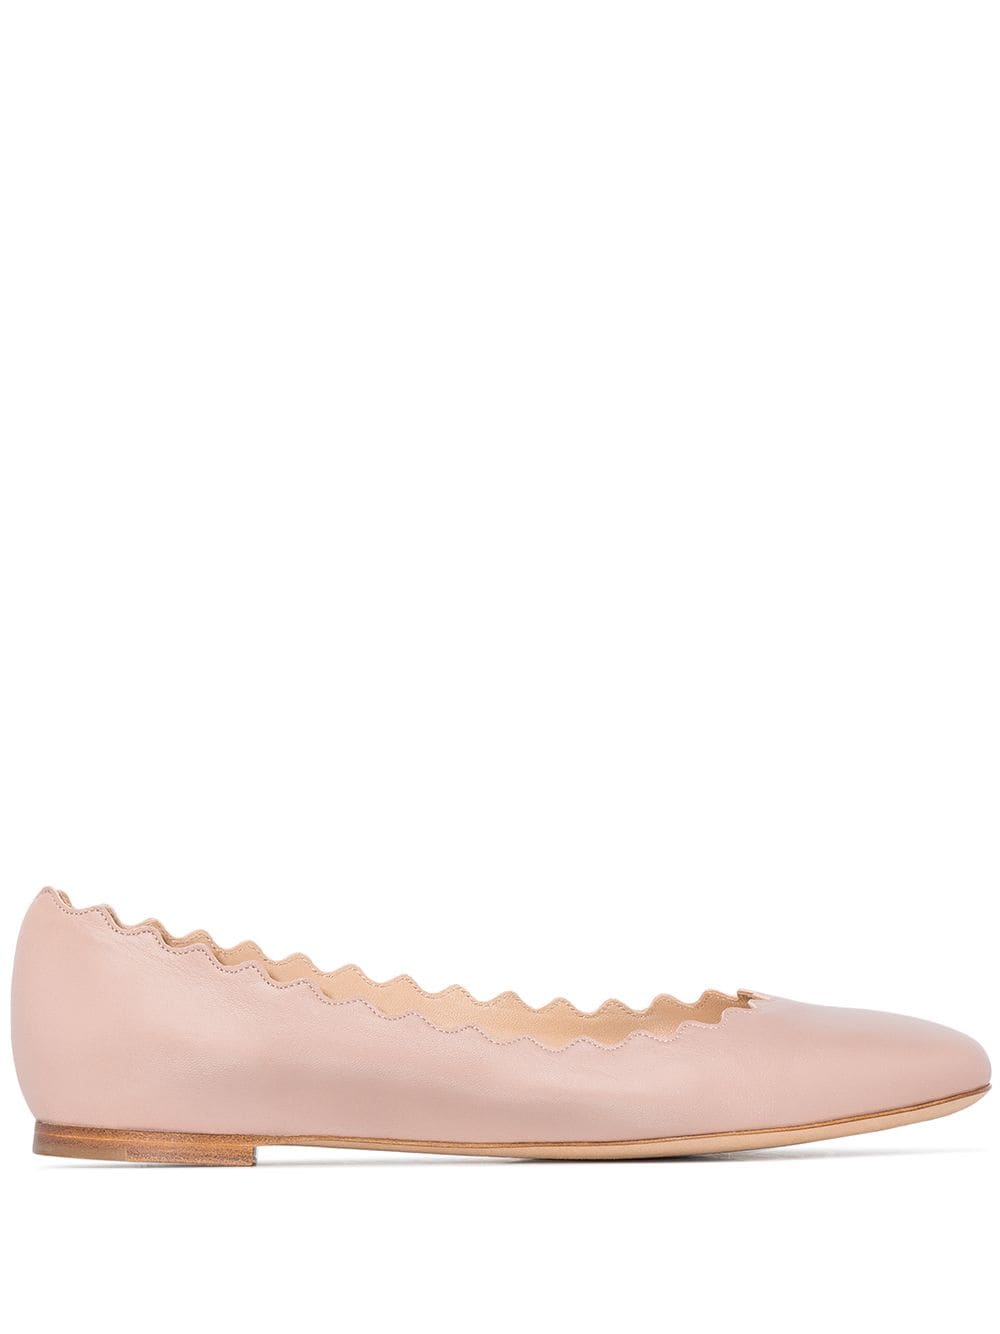 Lauren Leather Ballet Flats дамски обувки ChloÉ 840344970_36